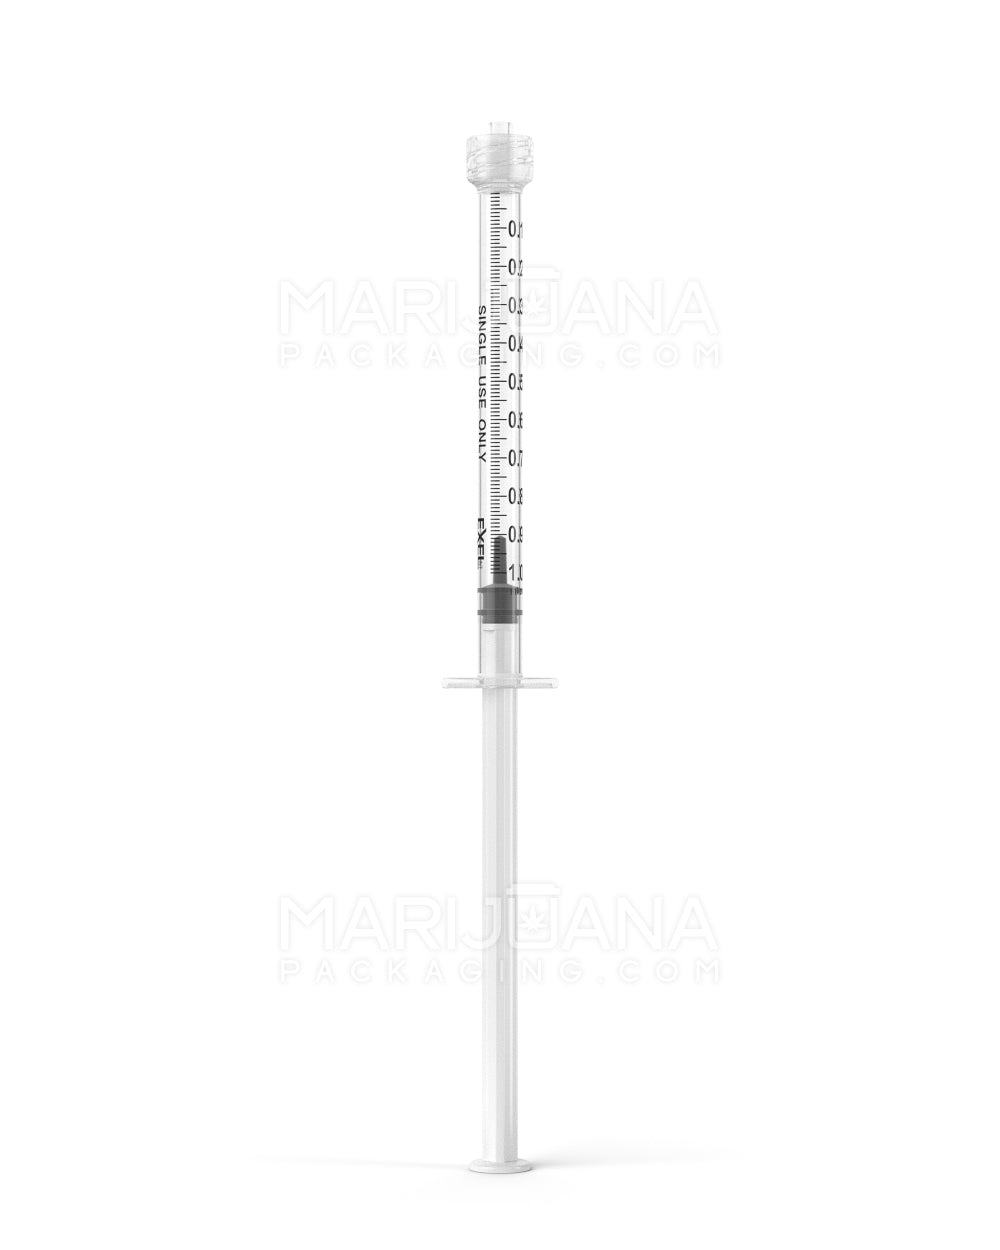 Luer Lock | Dab Applicator Syringes | 1mL - 0.1mL Increments | Sample - 1